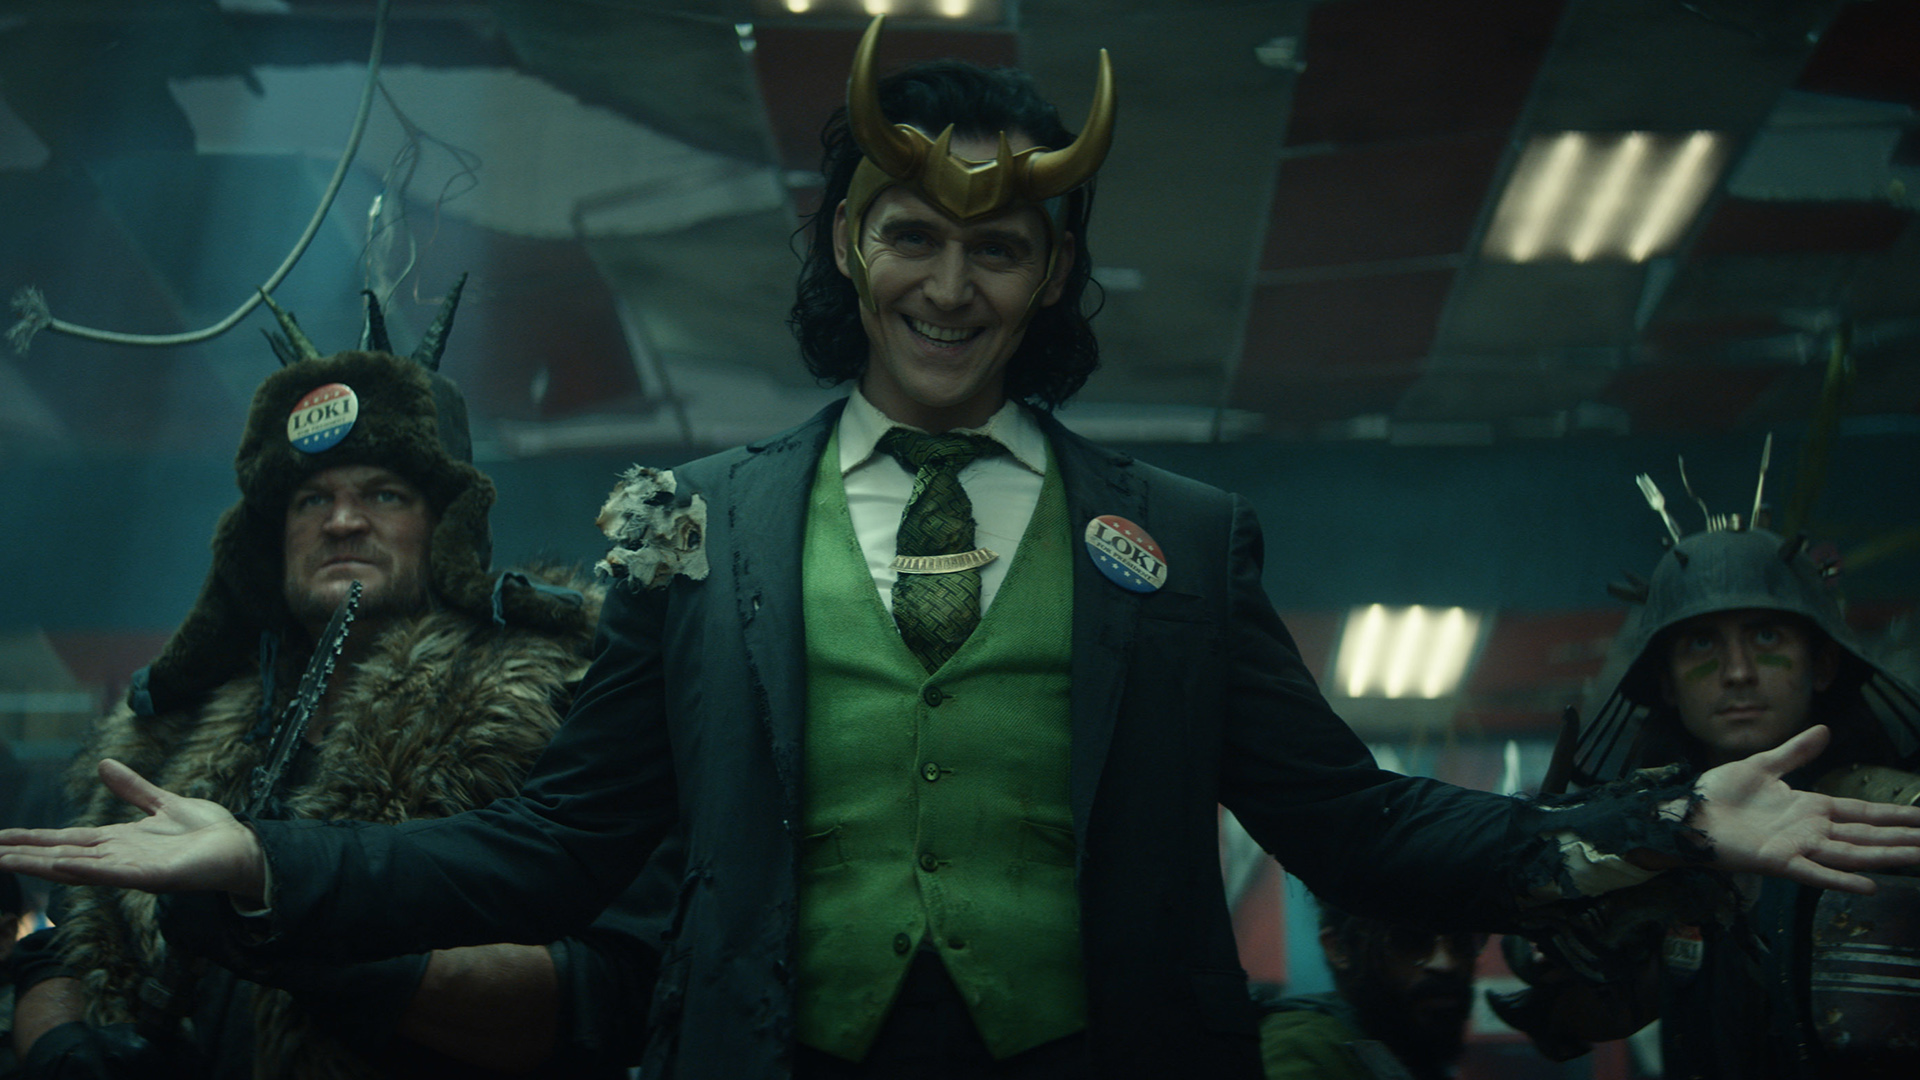 Loki episode 1 review: "Tom Hiddleston's a joy in time-bending premiere" | GamesRadar+